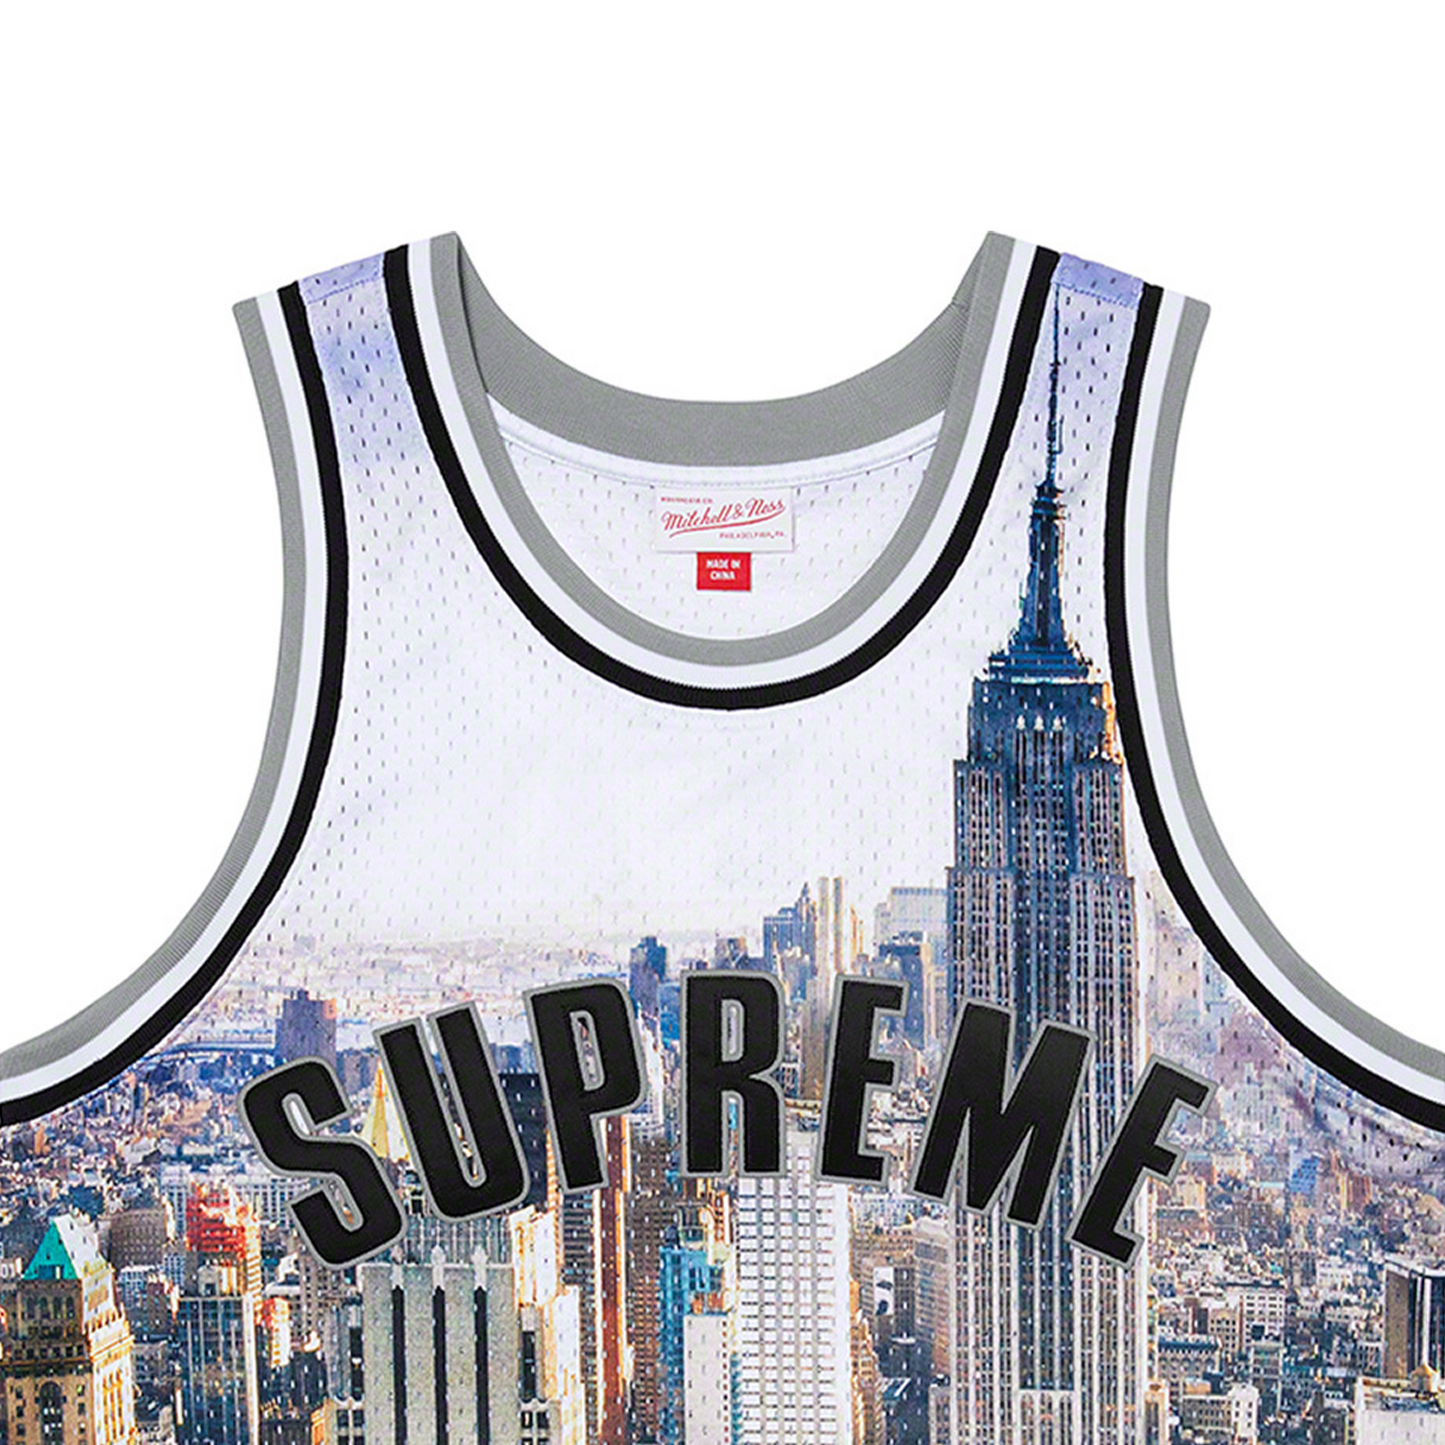 Supreme x Mitchell & Ness Basketball Jersey Skyline (SS21)